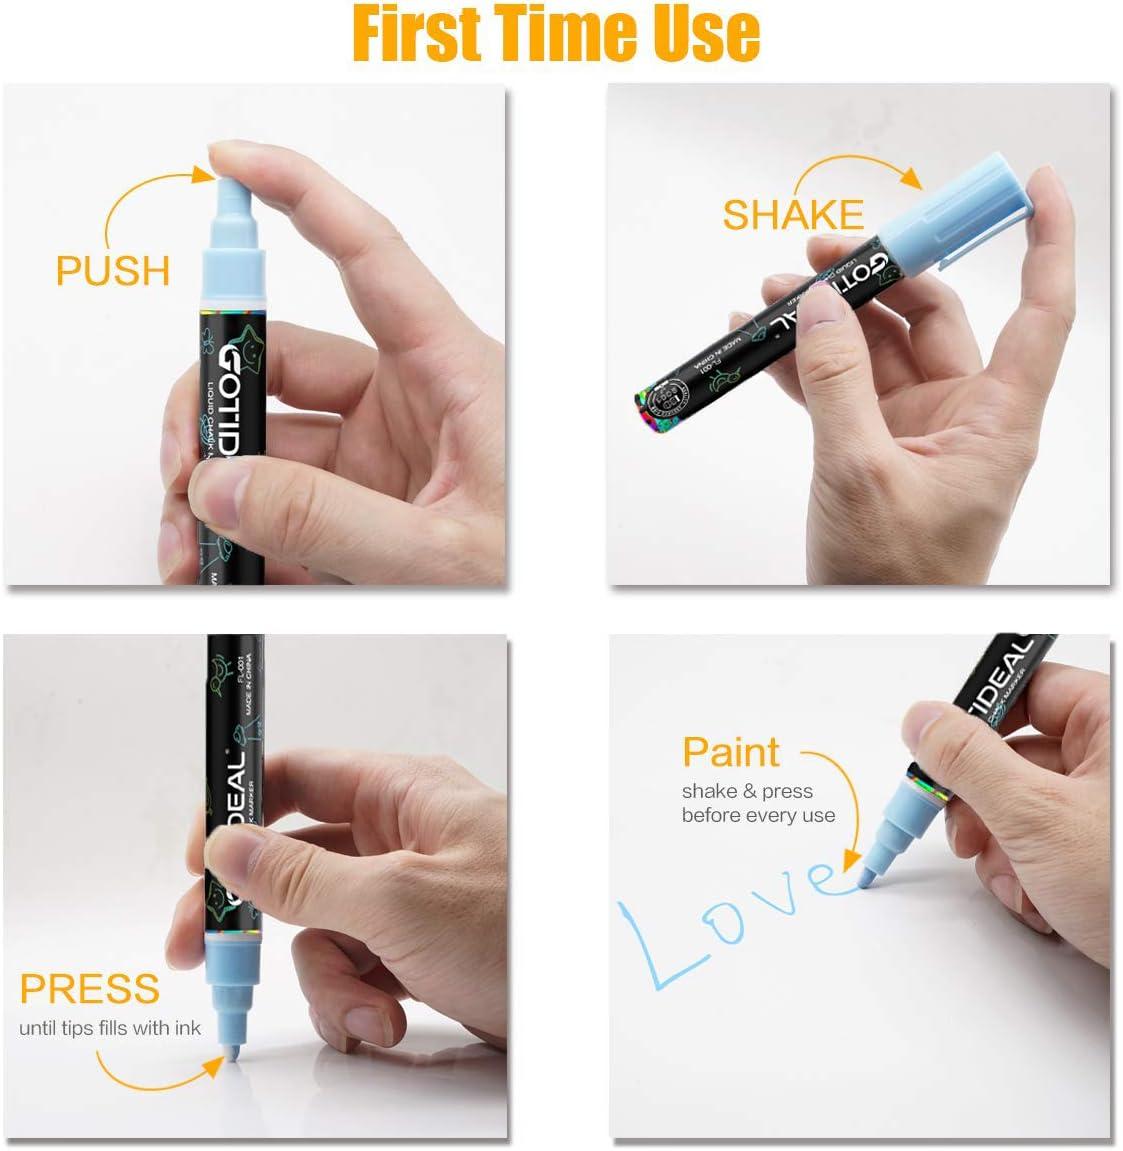 Neon & Pastel Chalk Markers Reversible Nib - Pack of 30 Pens Fine Tip - 3mm